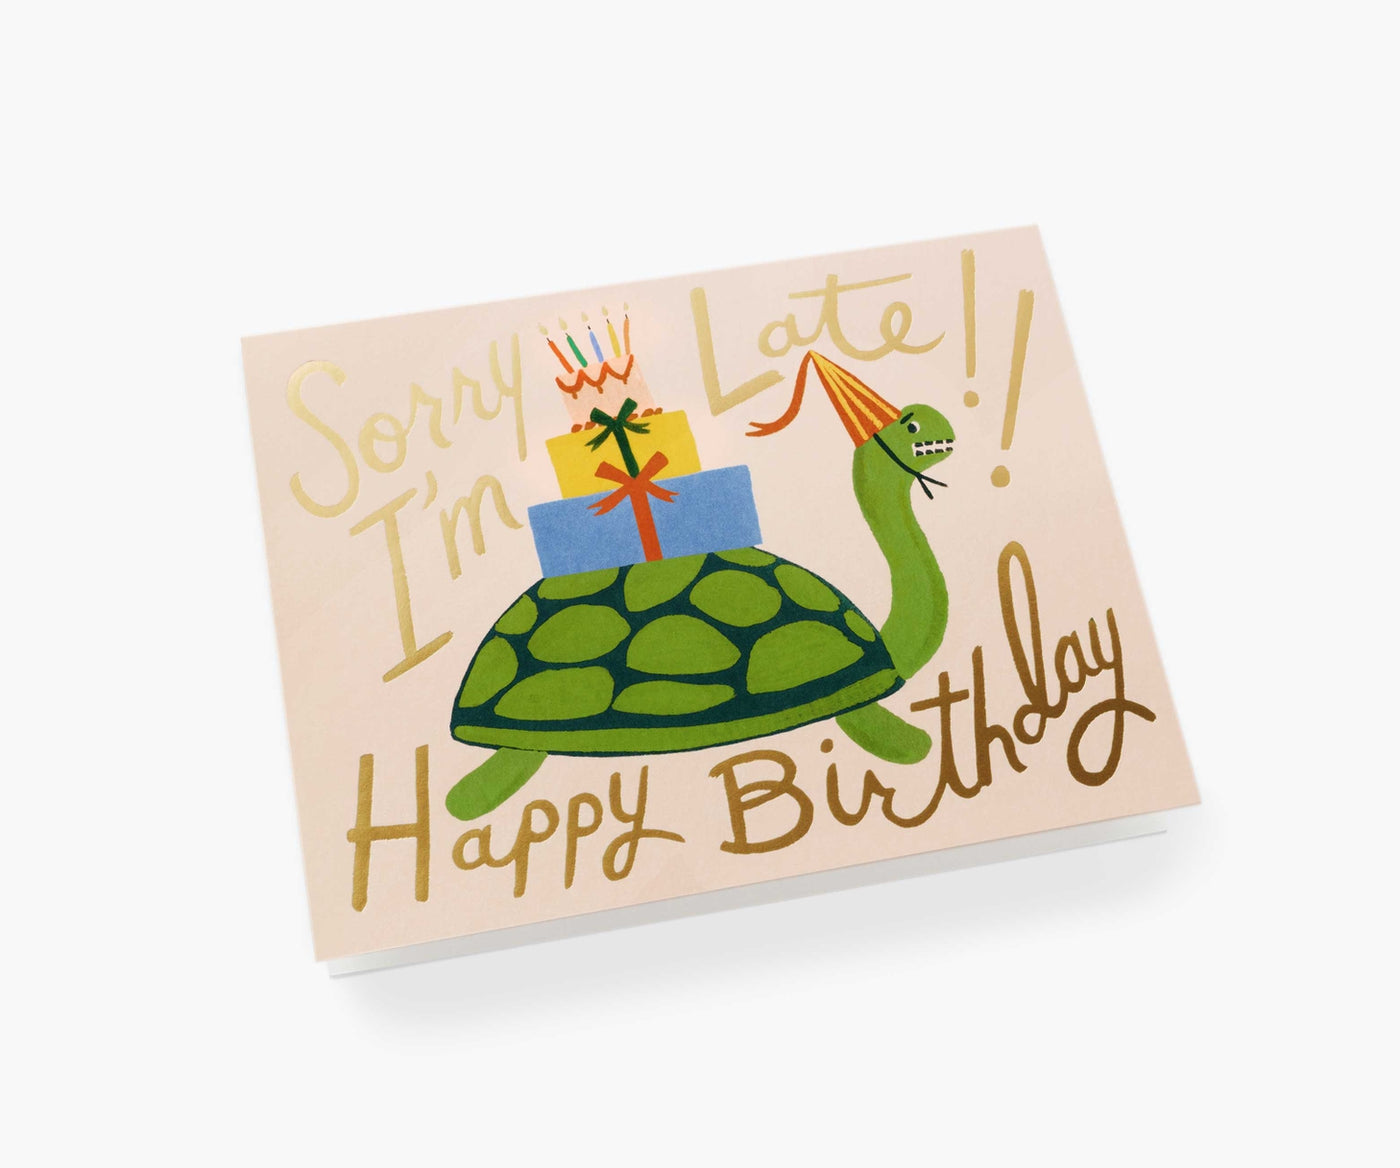 Turtle Belated Birthday Card